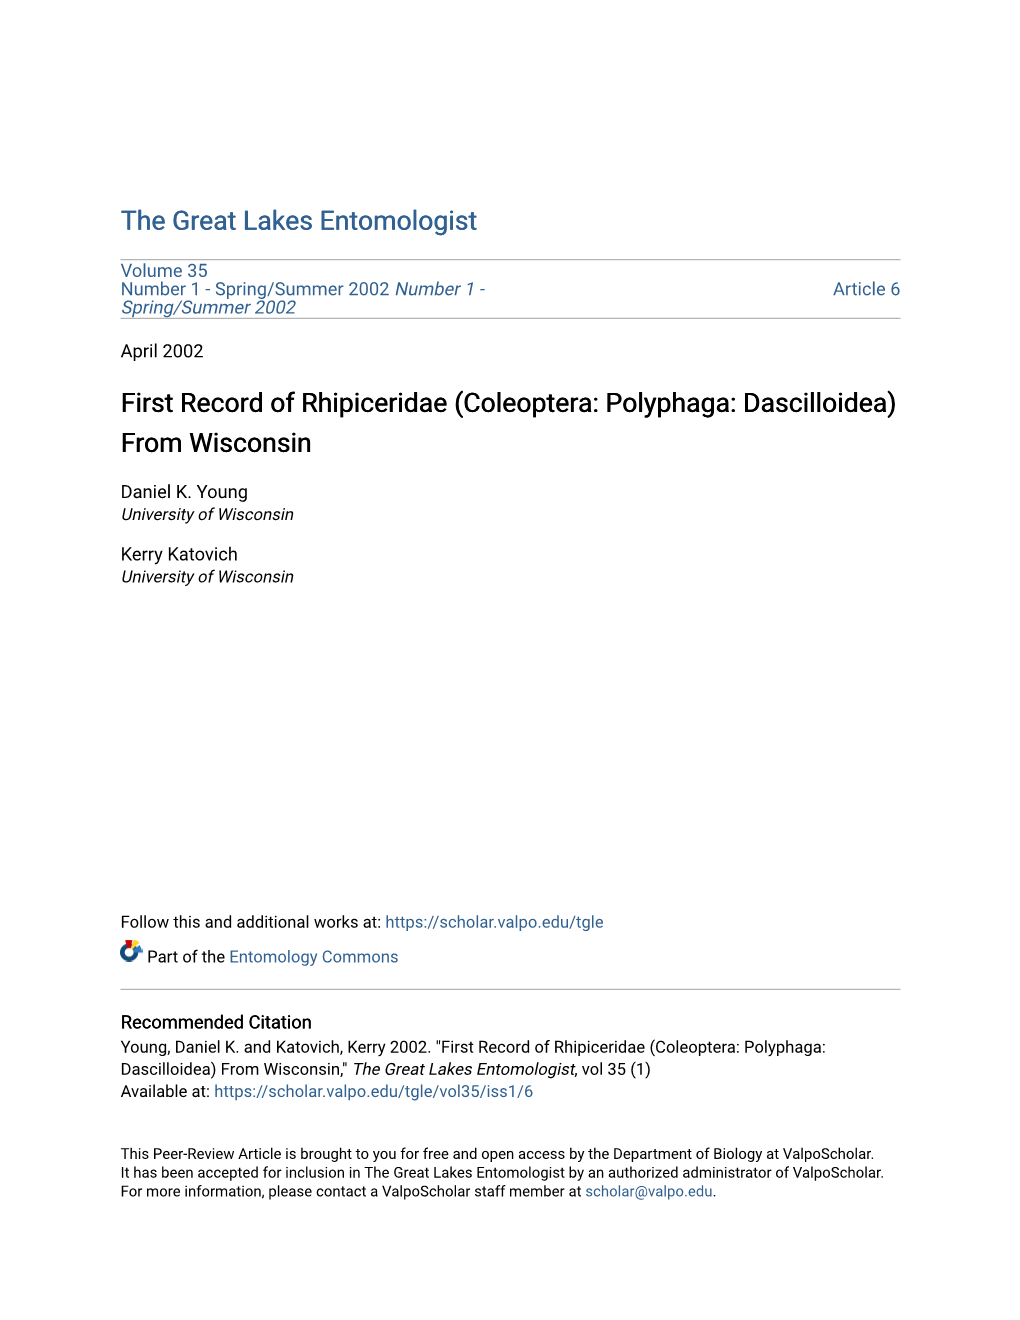 First Record of Rhipiceridae (Coleoptera: Polyphaga: Dascilloidea) from Wisconsin